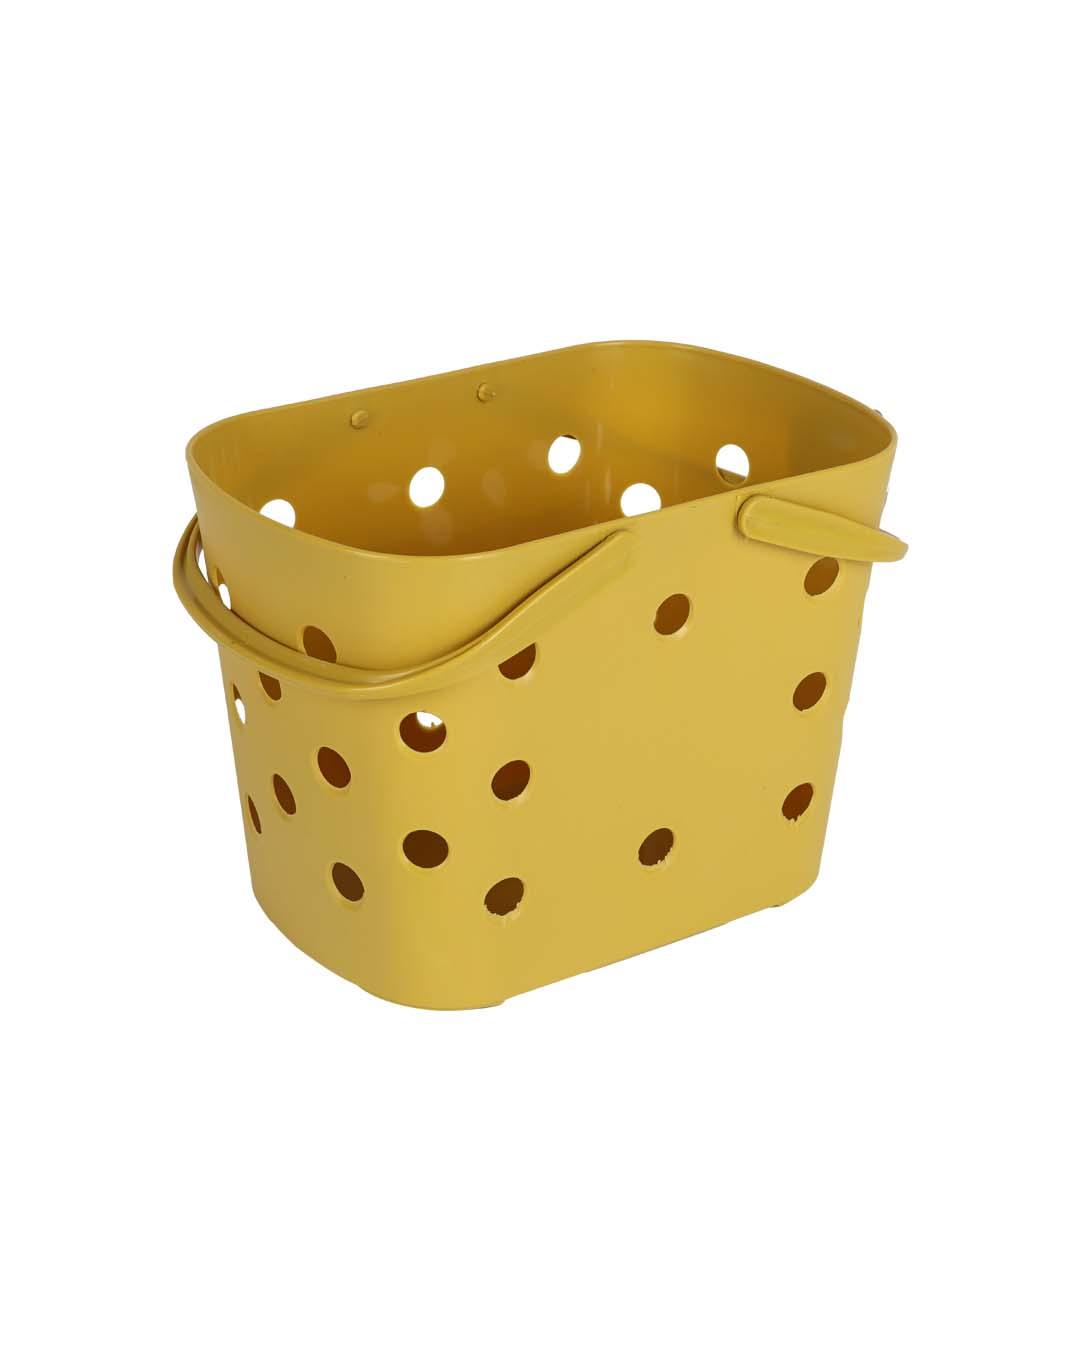 Basket with Handles, Yellow, Plastic - MARKET 99